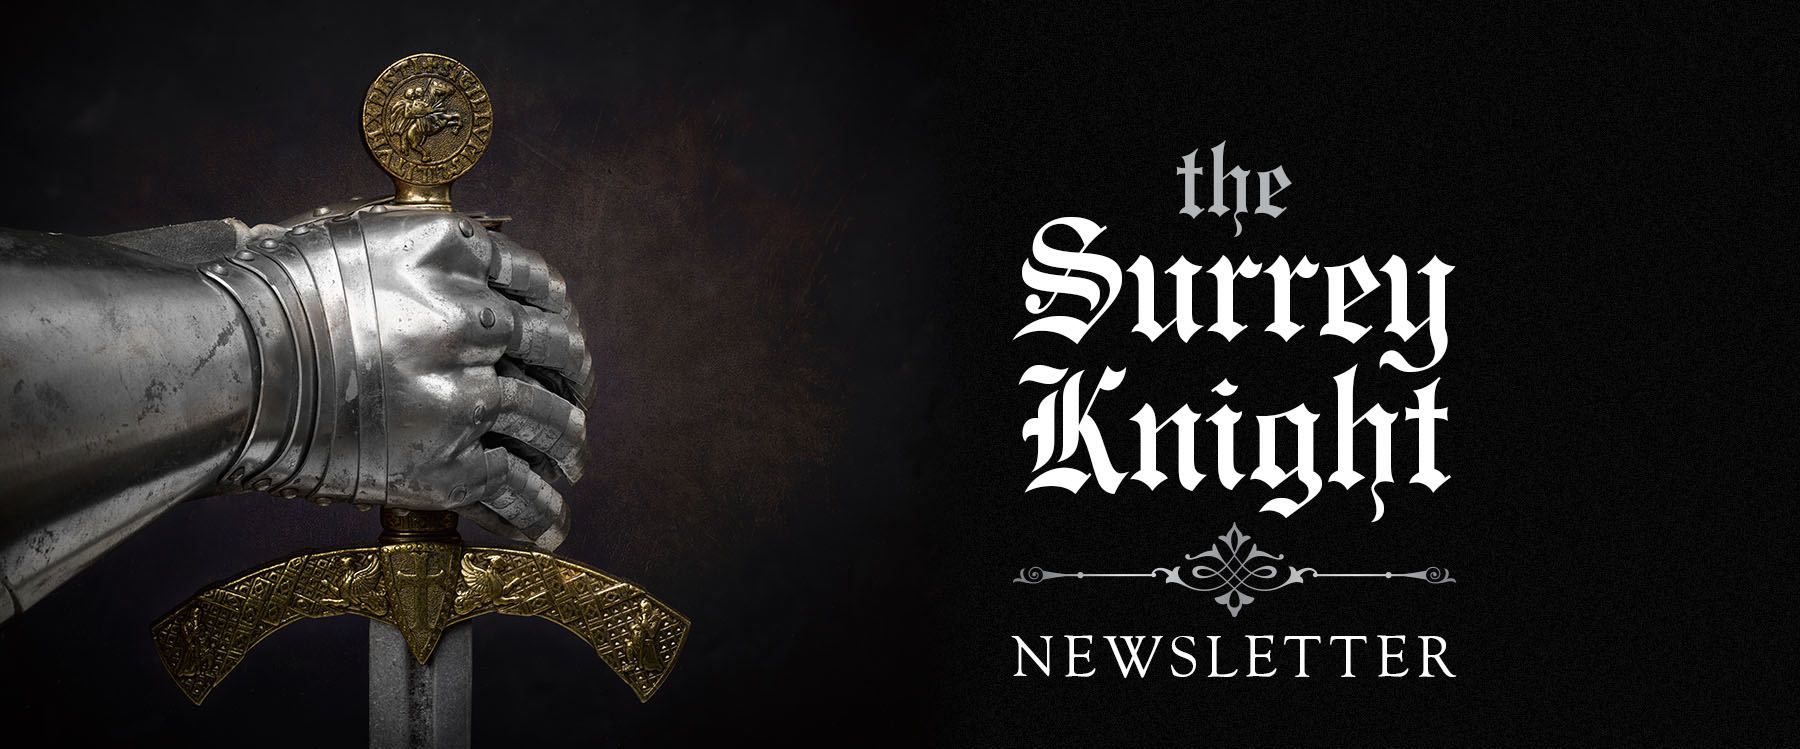 The Surrey Knight Newsletter